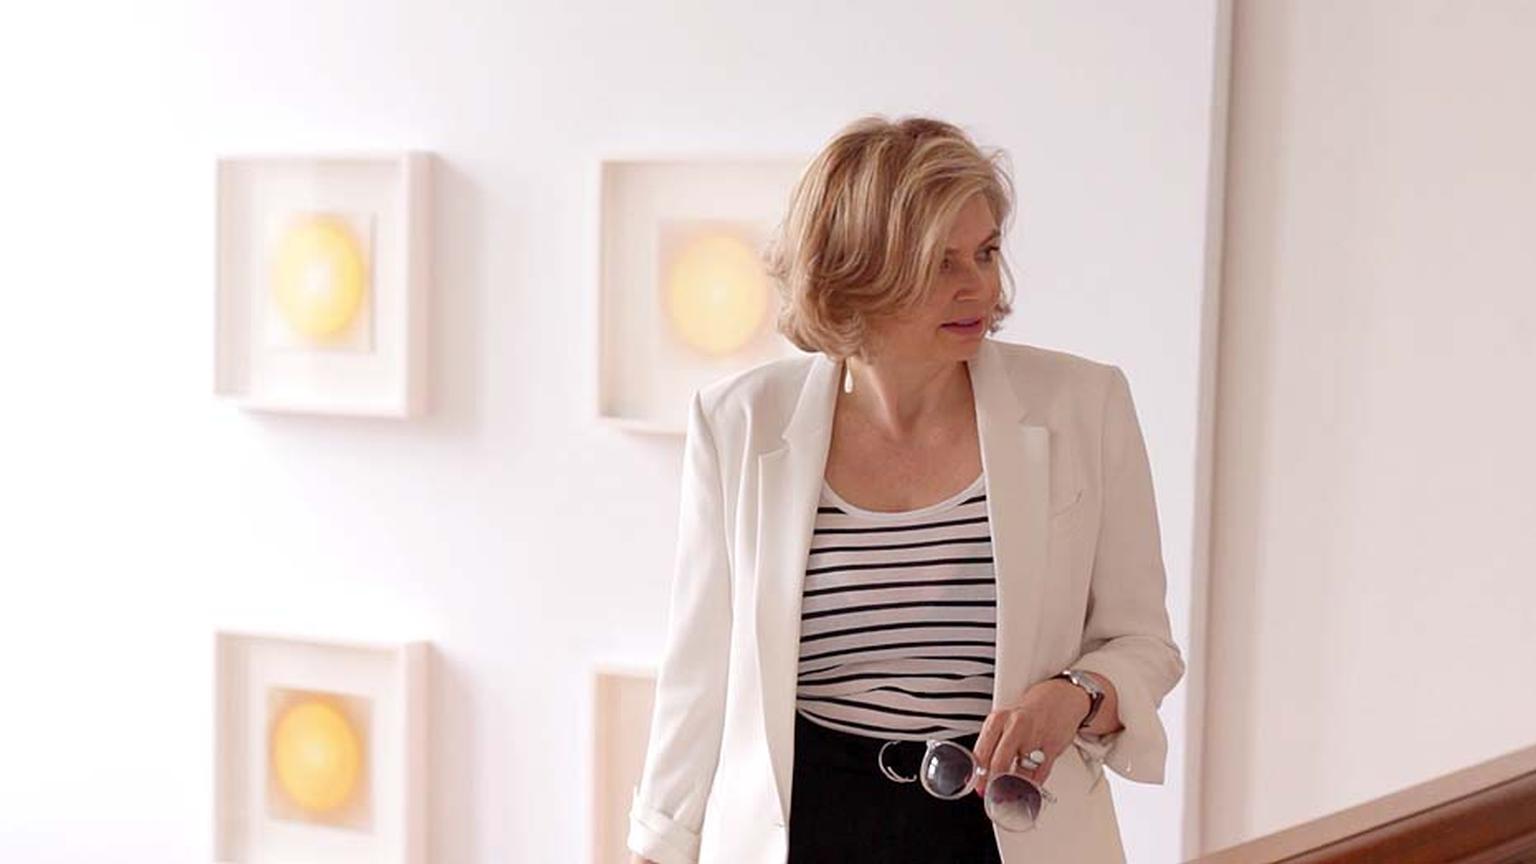 Louis Vuitton watches video_Maria Doulton.jpg